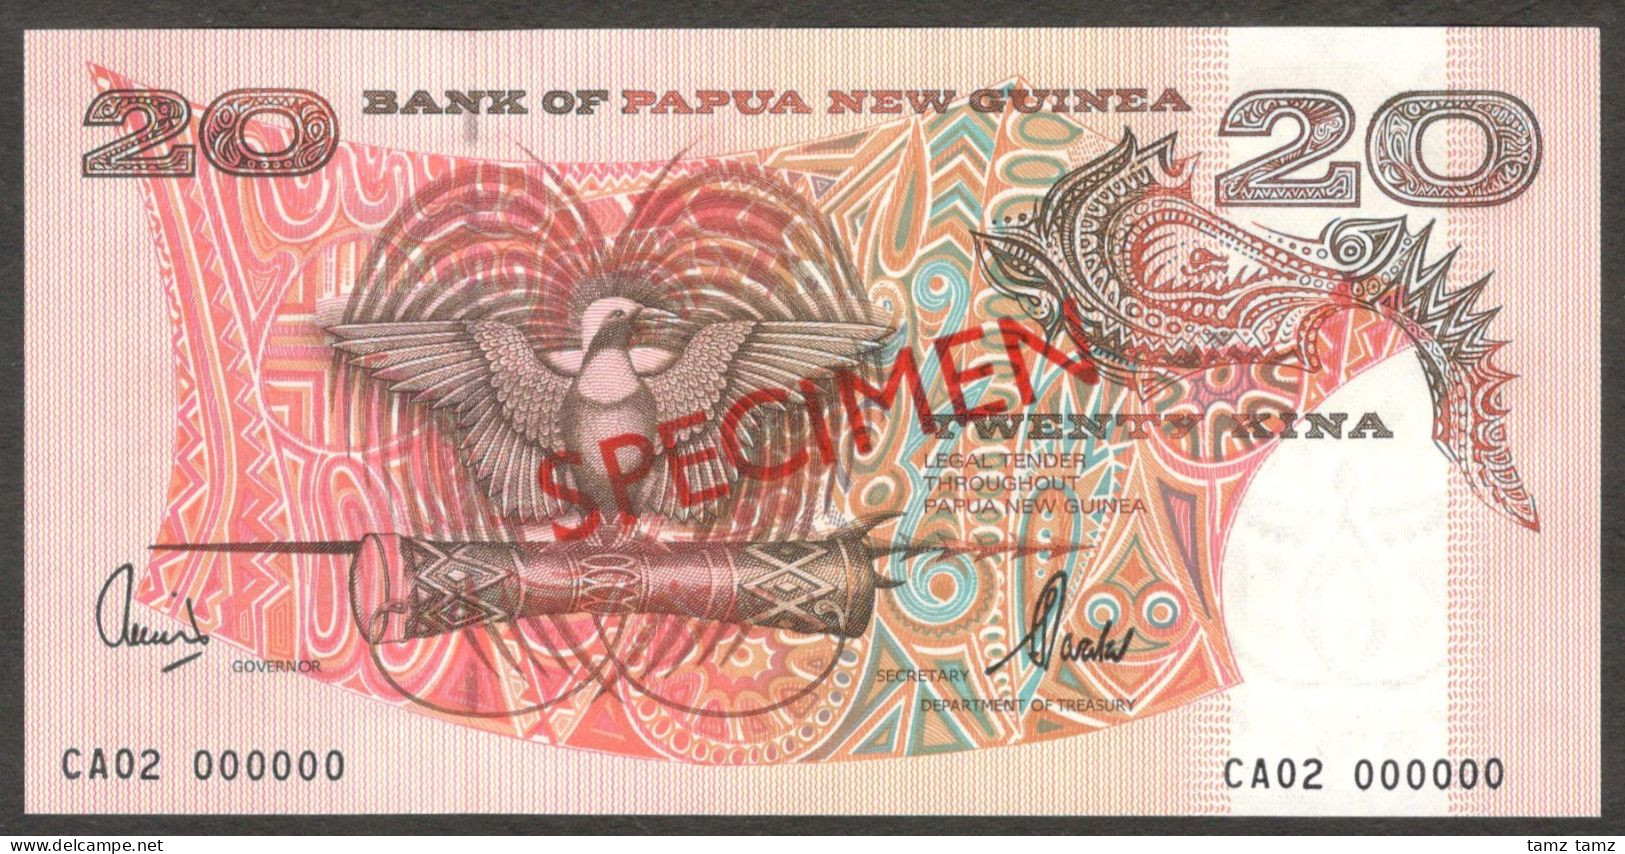 Papua New Guinea 20 Kina P-10es 2002 Specimen CA02 000000 UNC - Papua Nueva Guinea